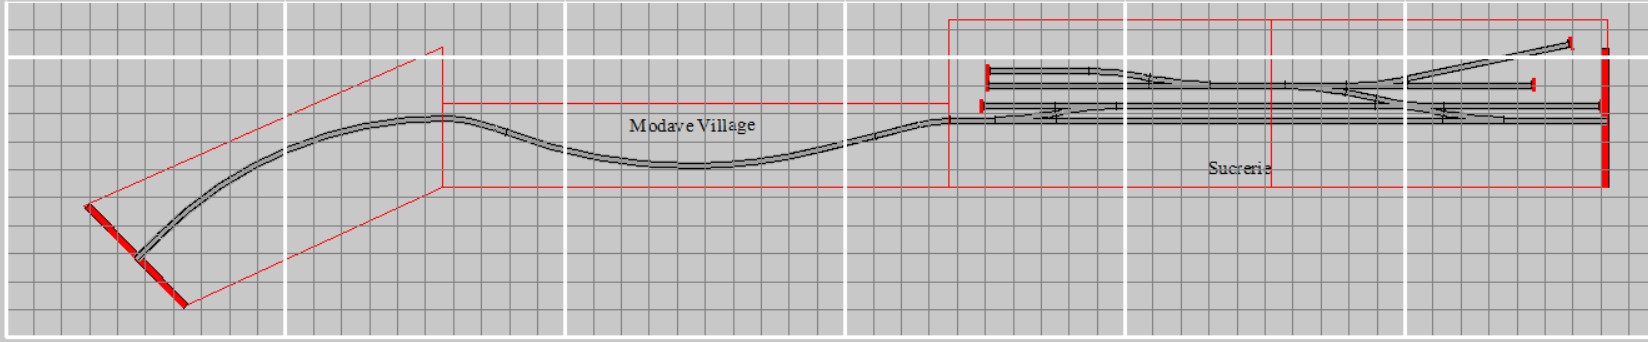 L126 - Modave Village - Page 3 PlanMHR